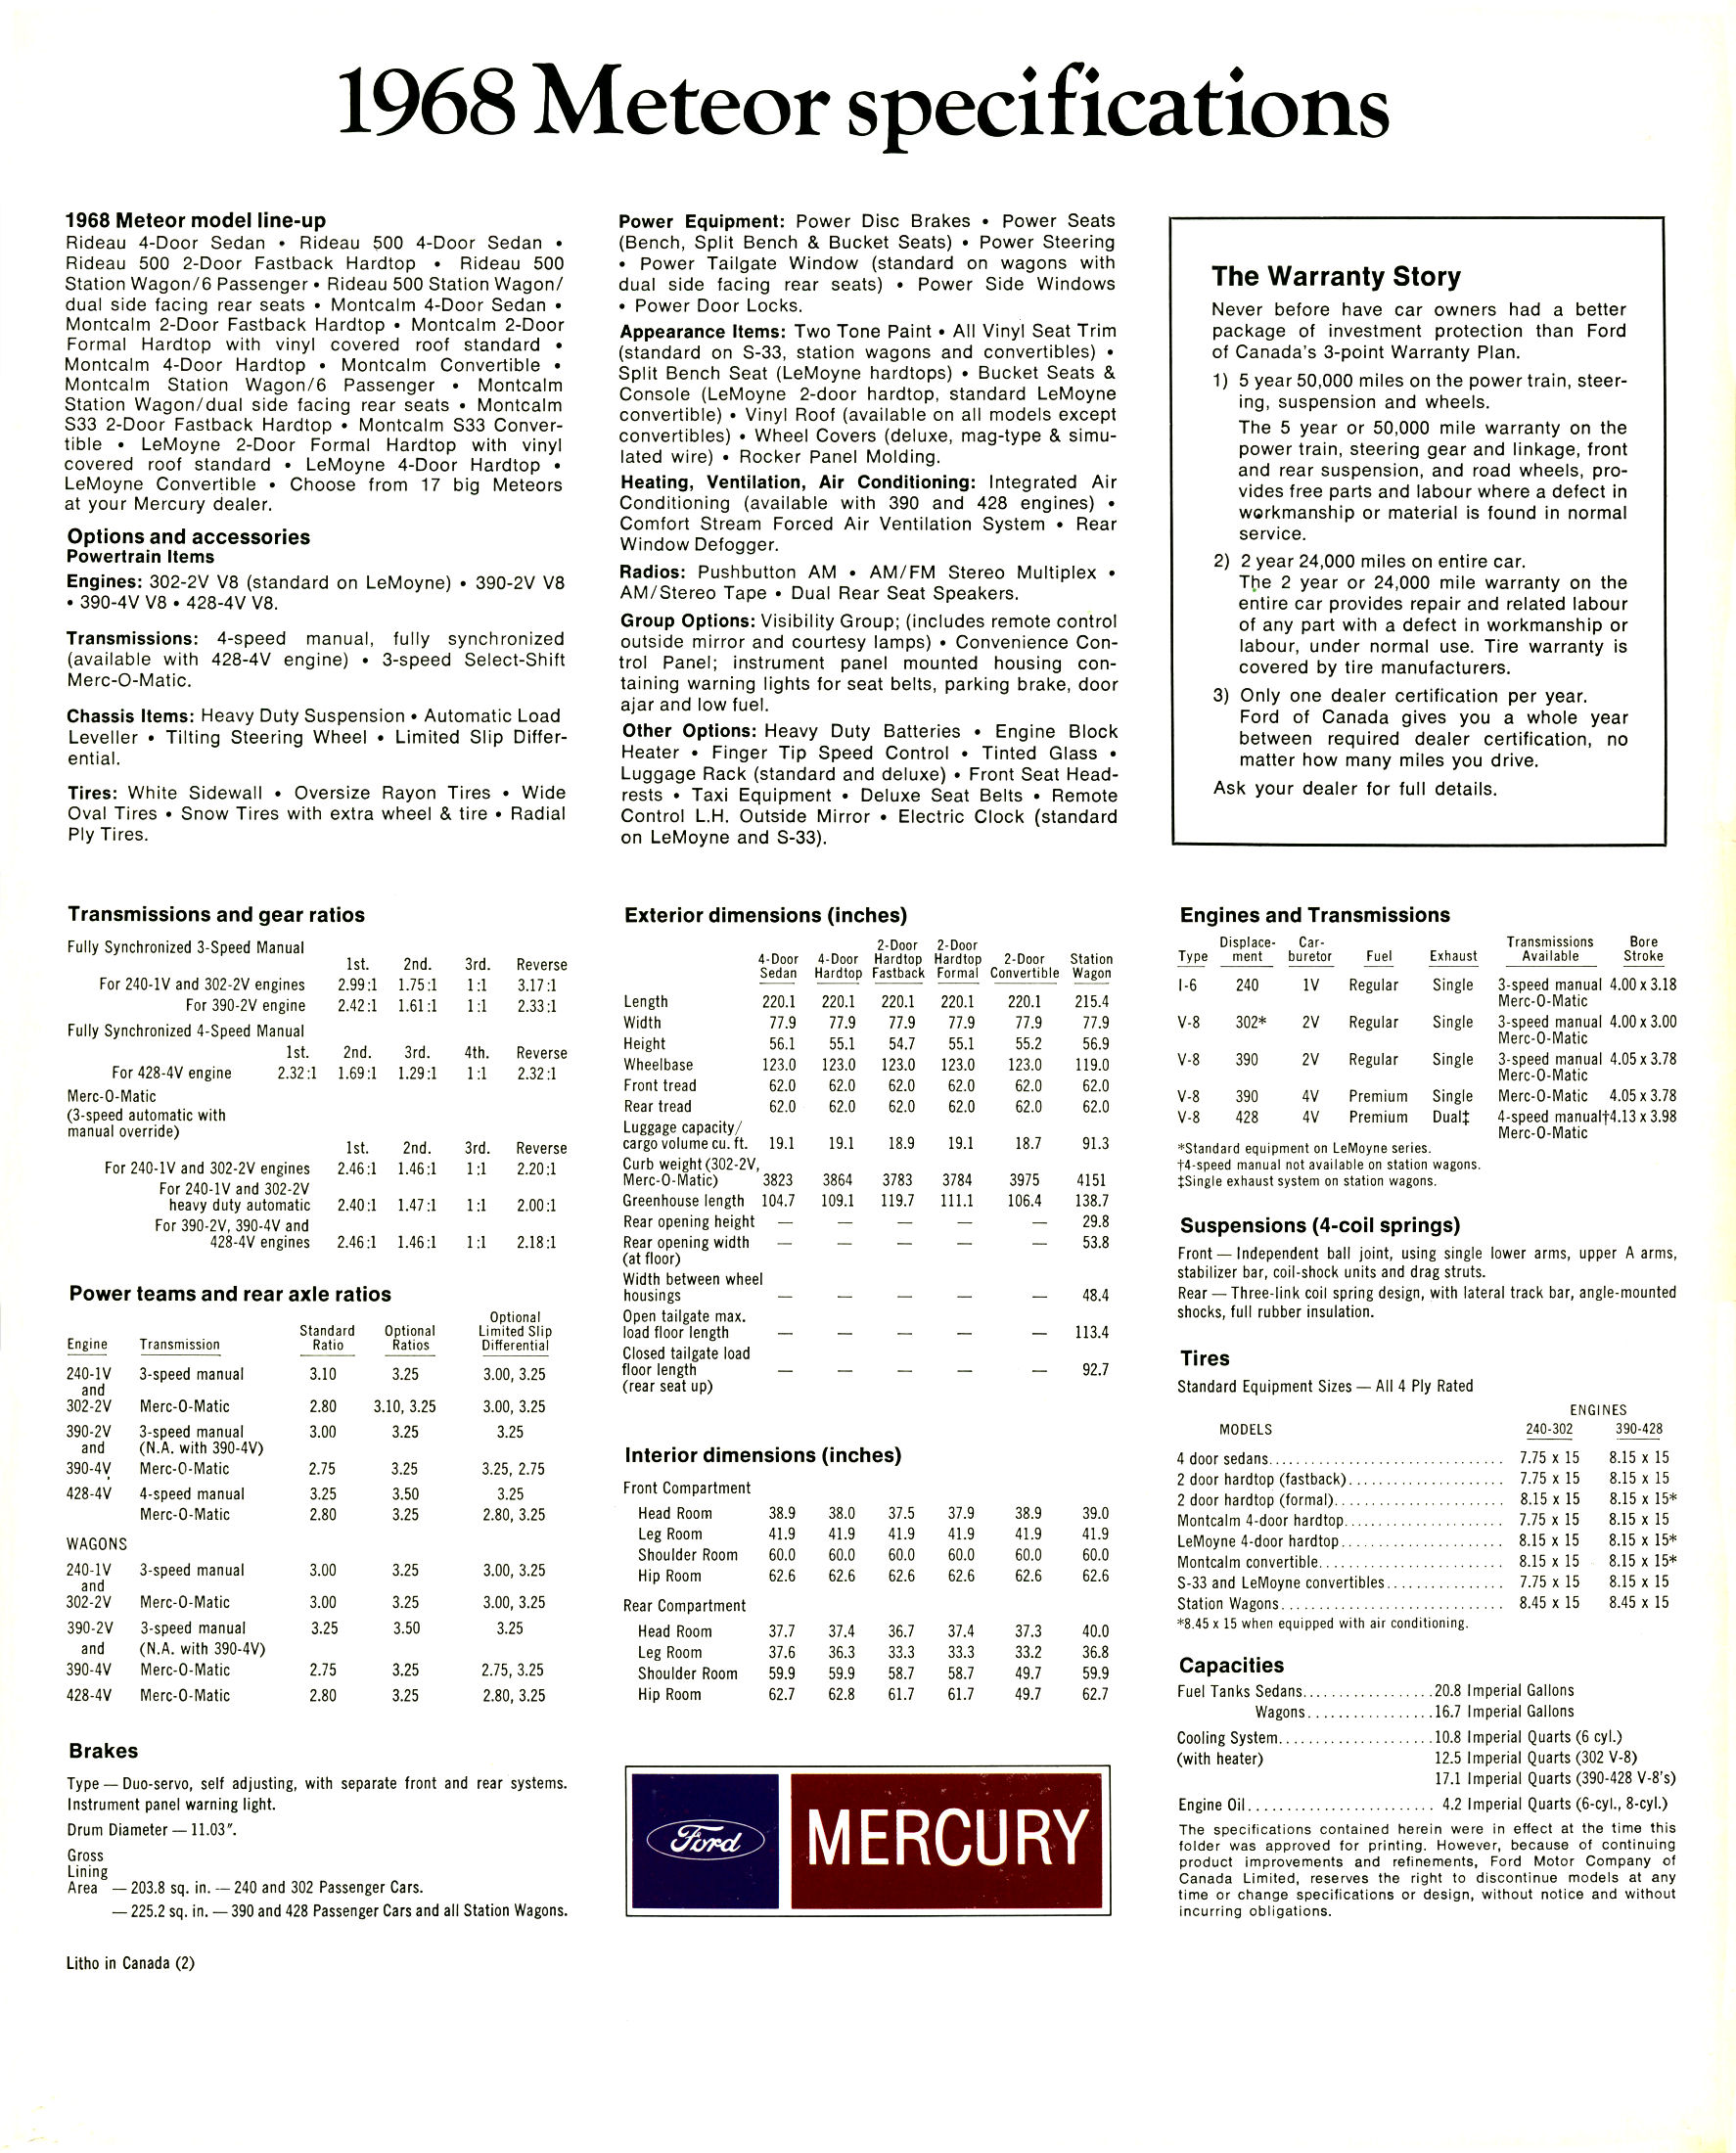 1968 Mercury Meteor Full Line (Cdn)-24